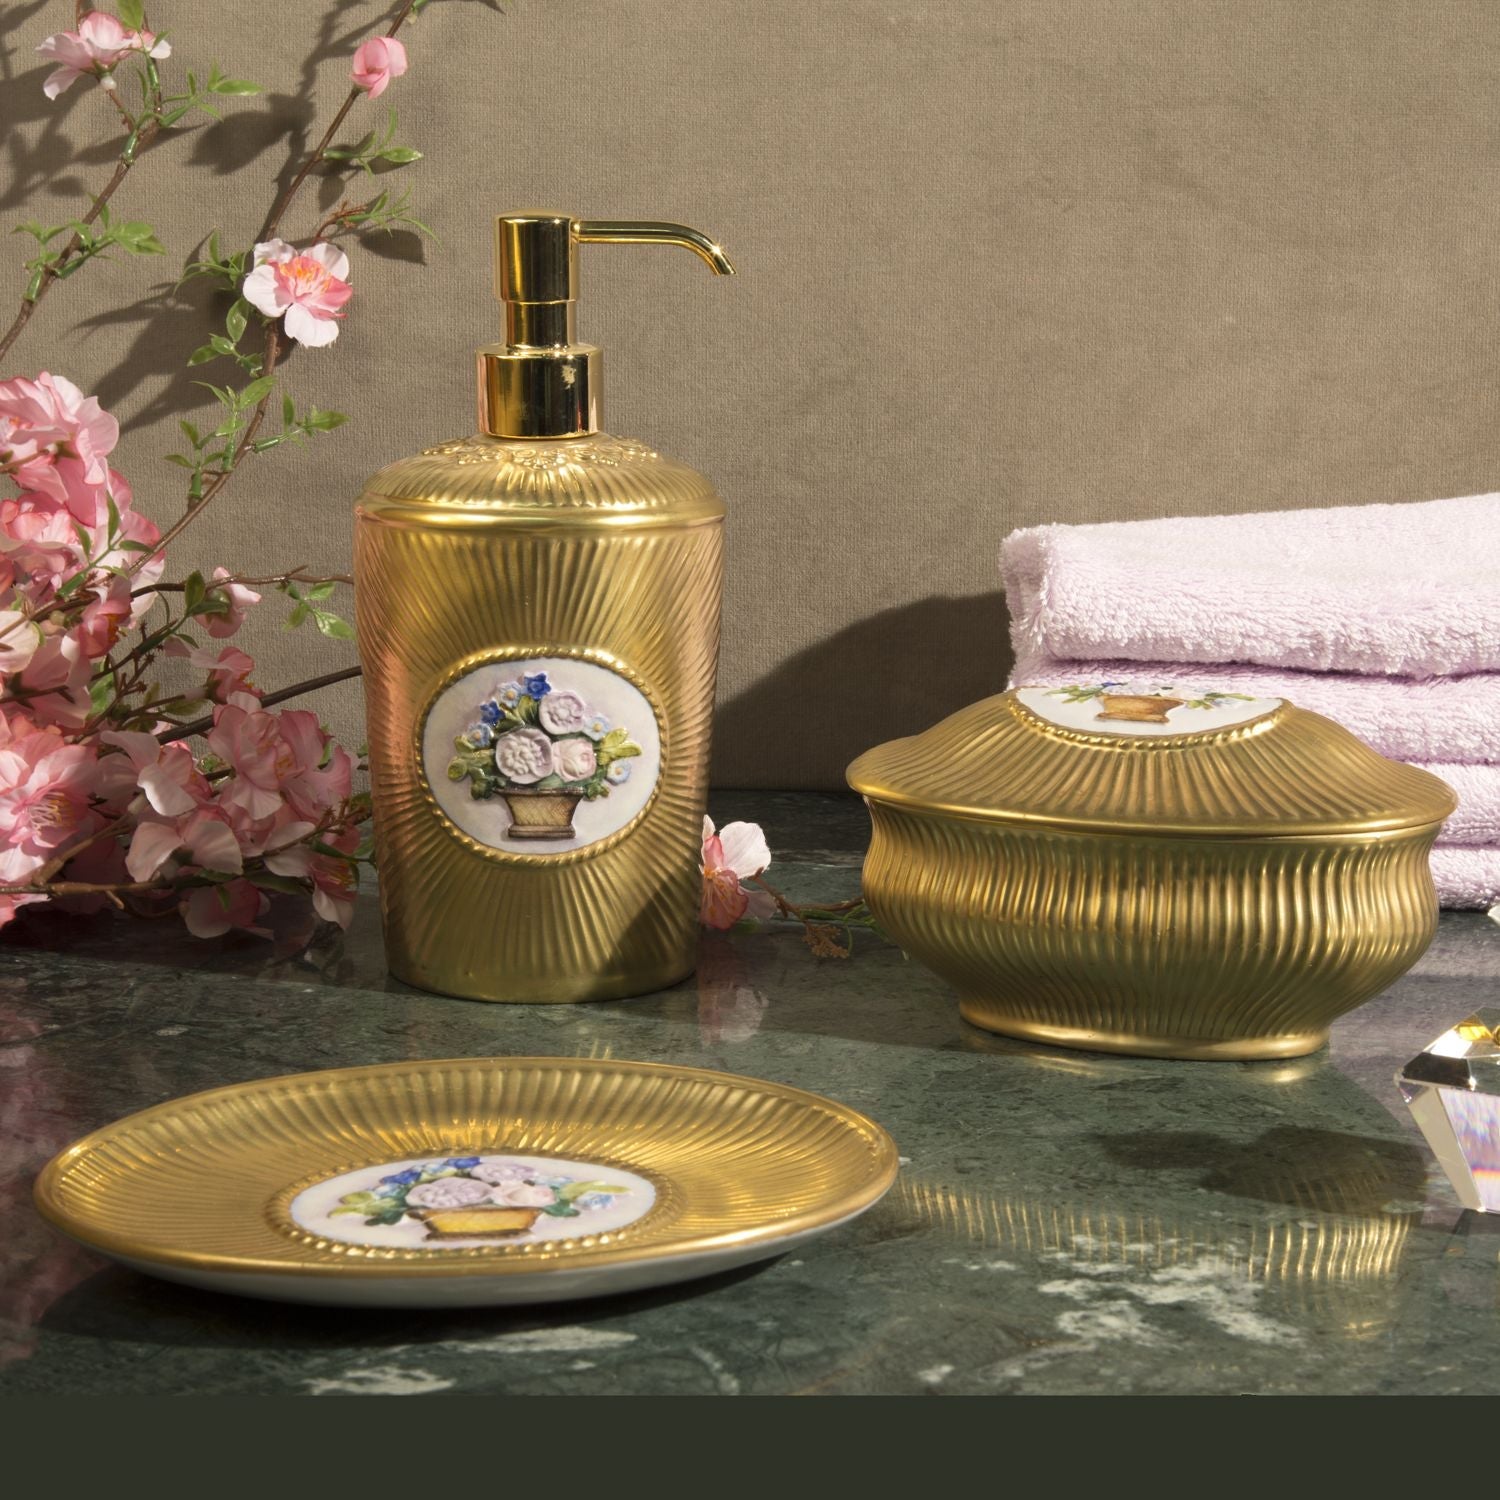 Caravaggio Gold Bathroom Set